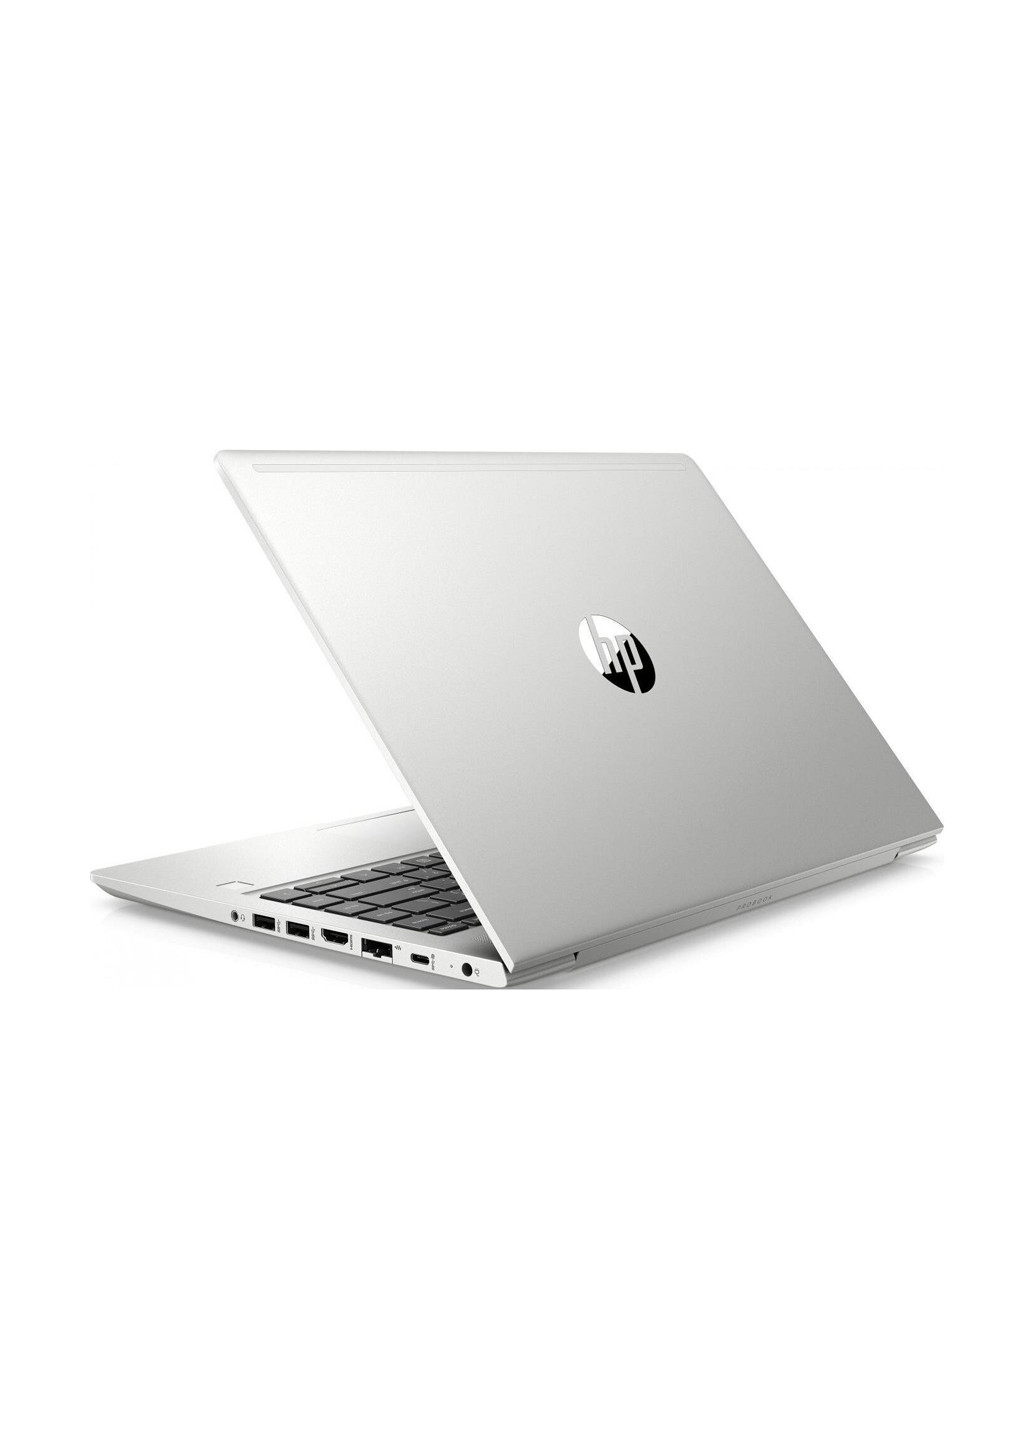 Ноутбук HP probook 440 g6 (4rz57av_v5) silver (158838072)